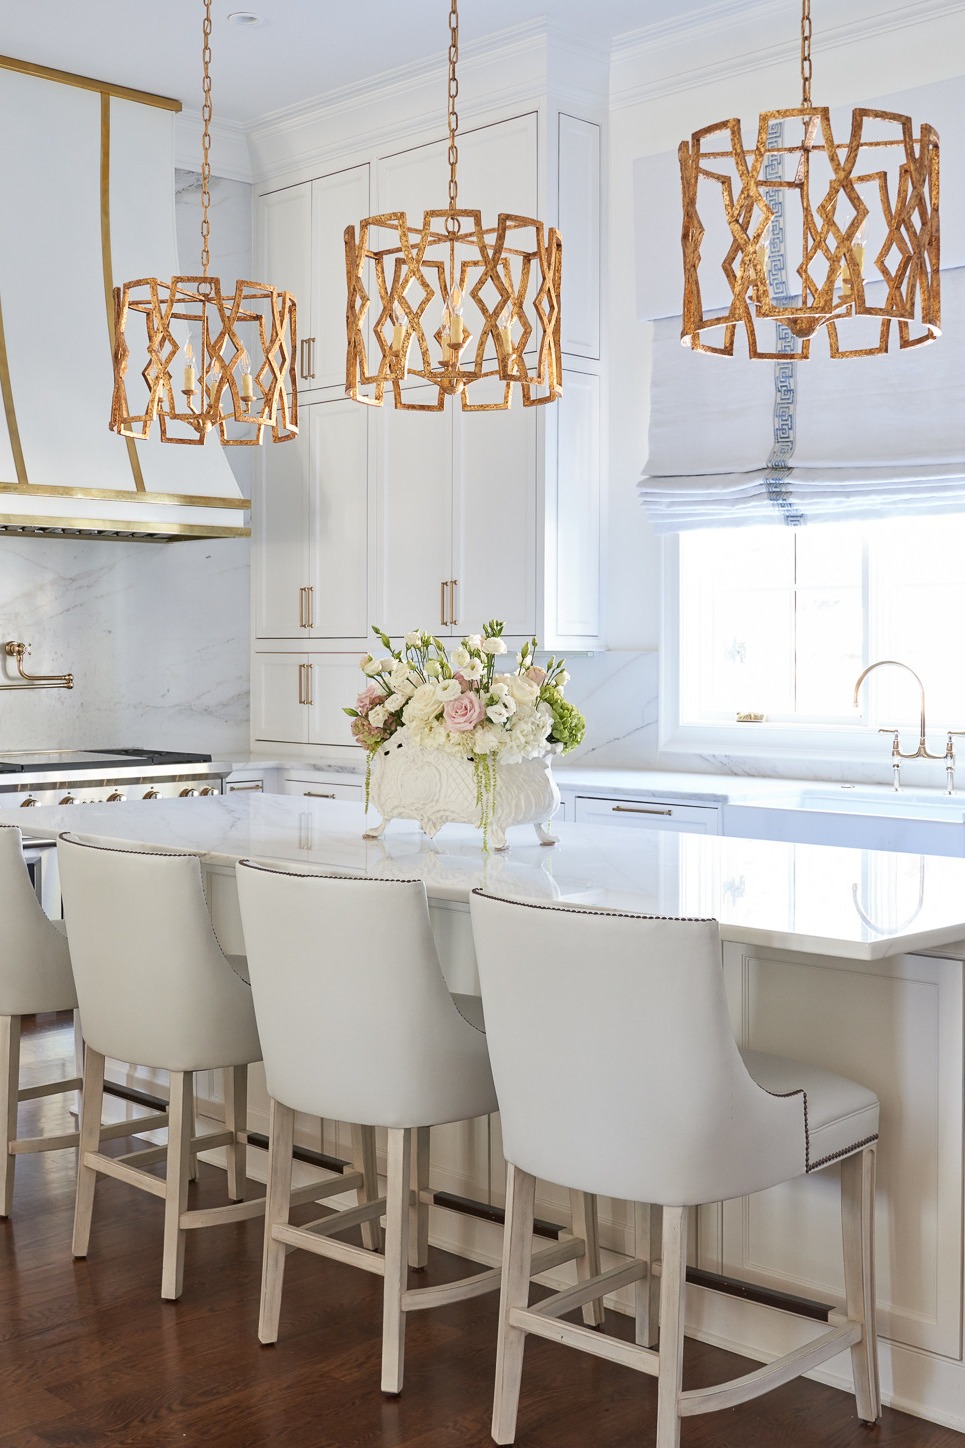 Kitchen Stone Backsplash With White Cabinets Marble Backsplash White Cabinetry Pendant Lights